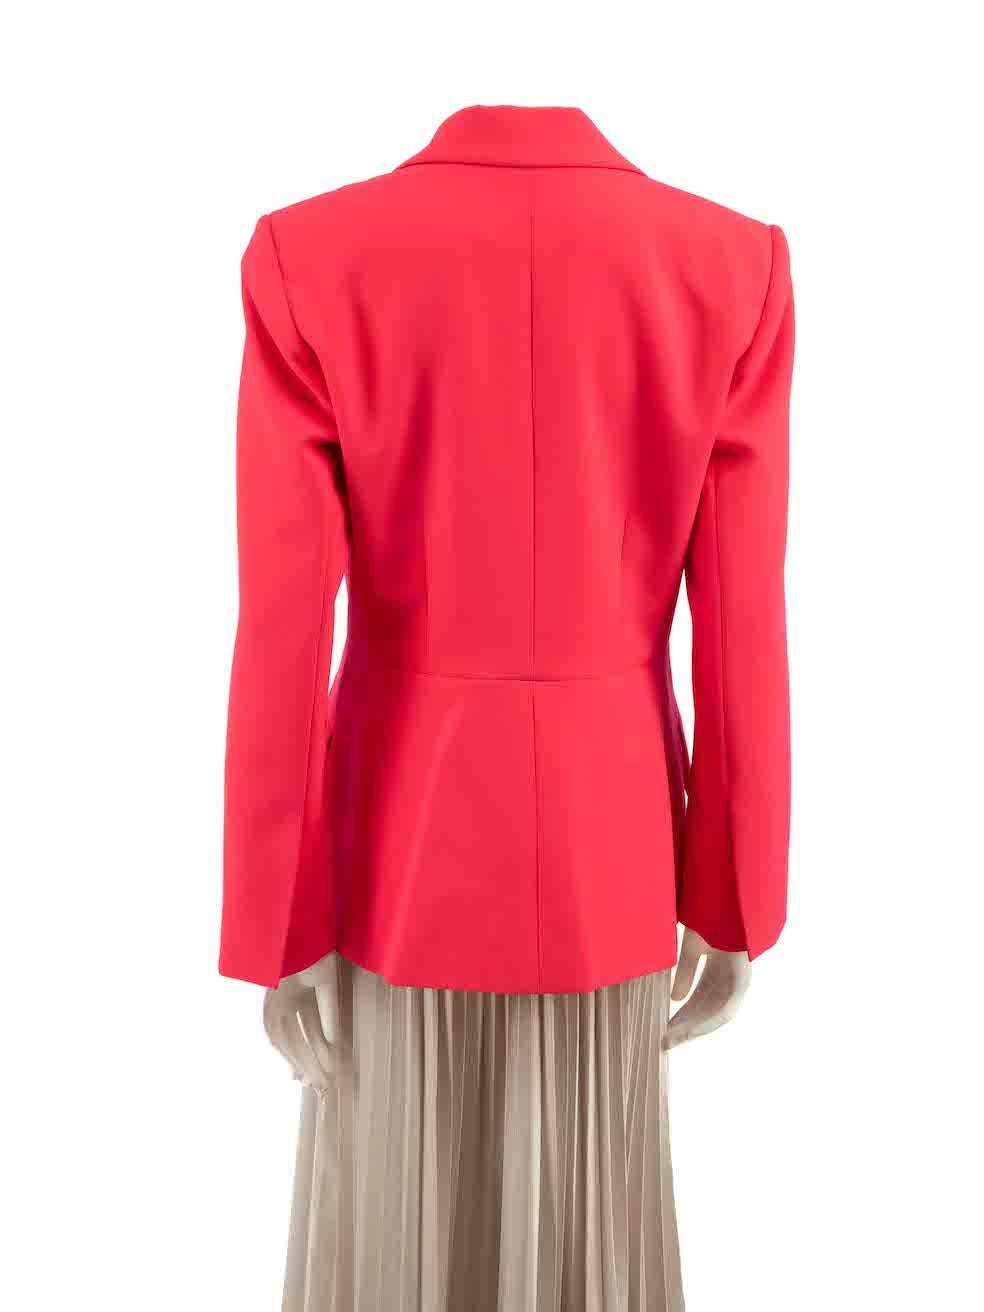 Carolina Herrera Neon Pink Single Breasted Blazer Size XL In Good Condition For Sale In London, GB